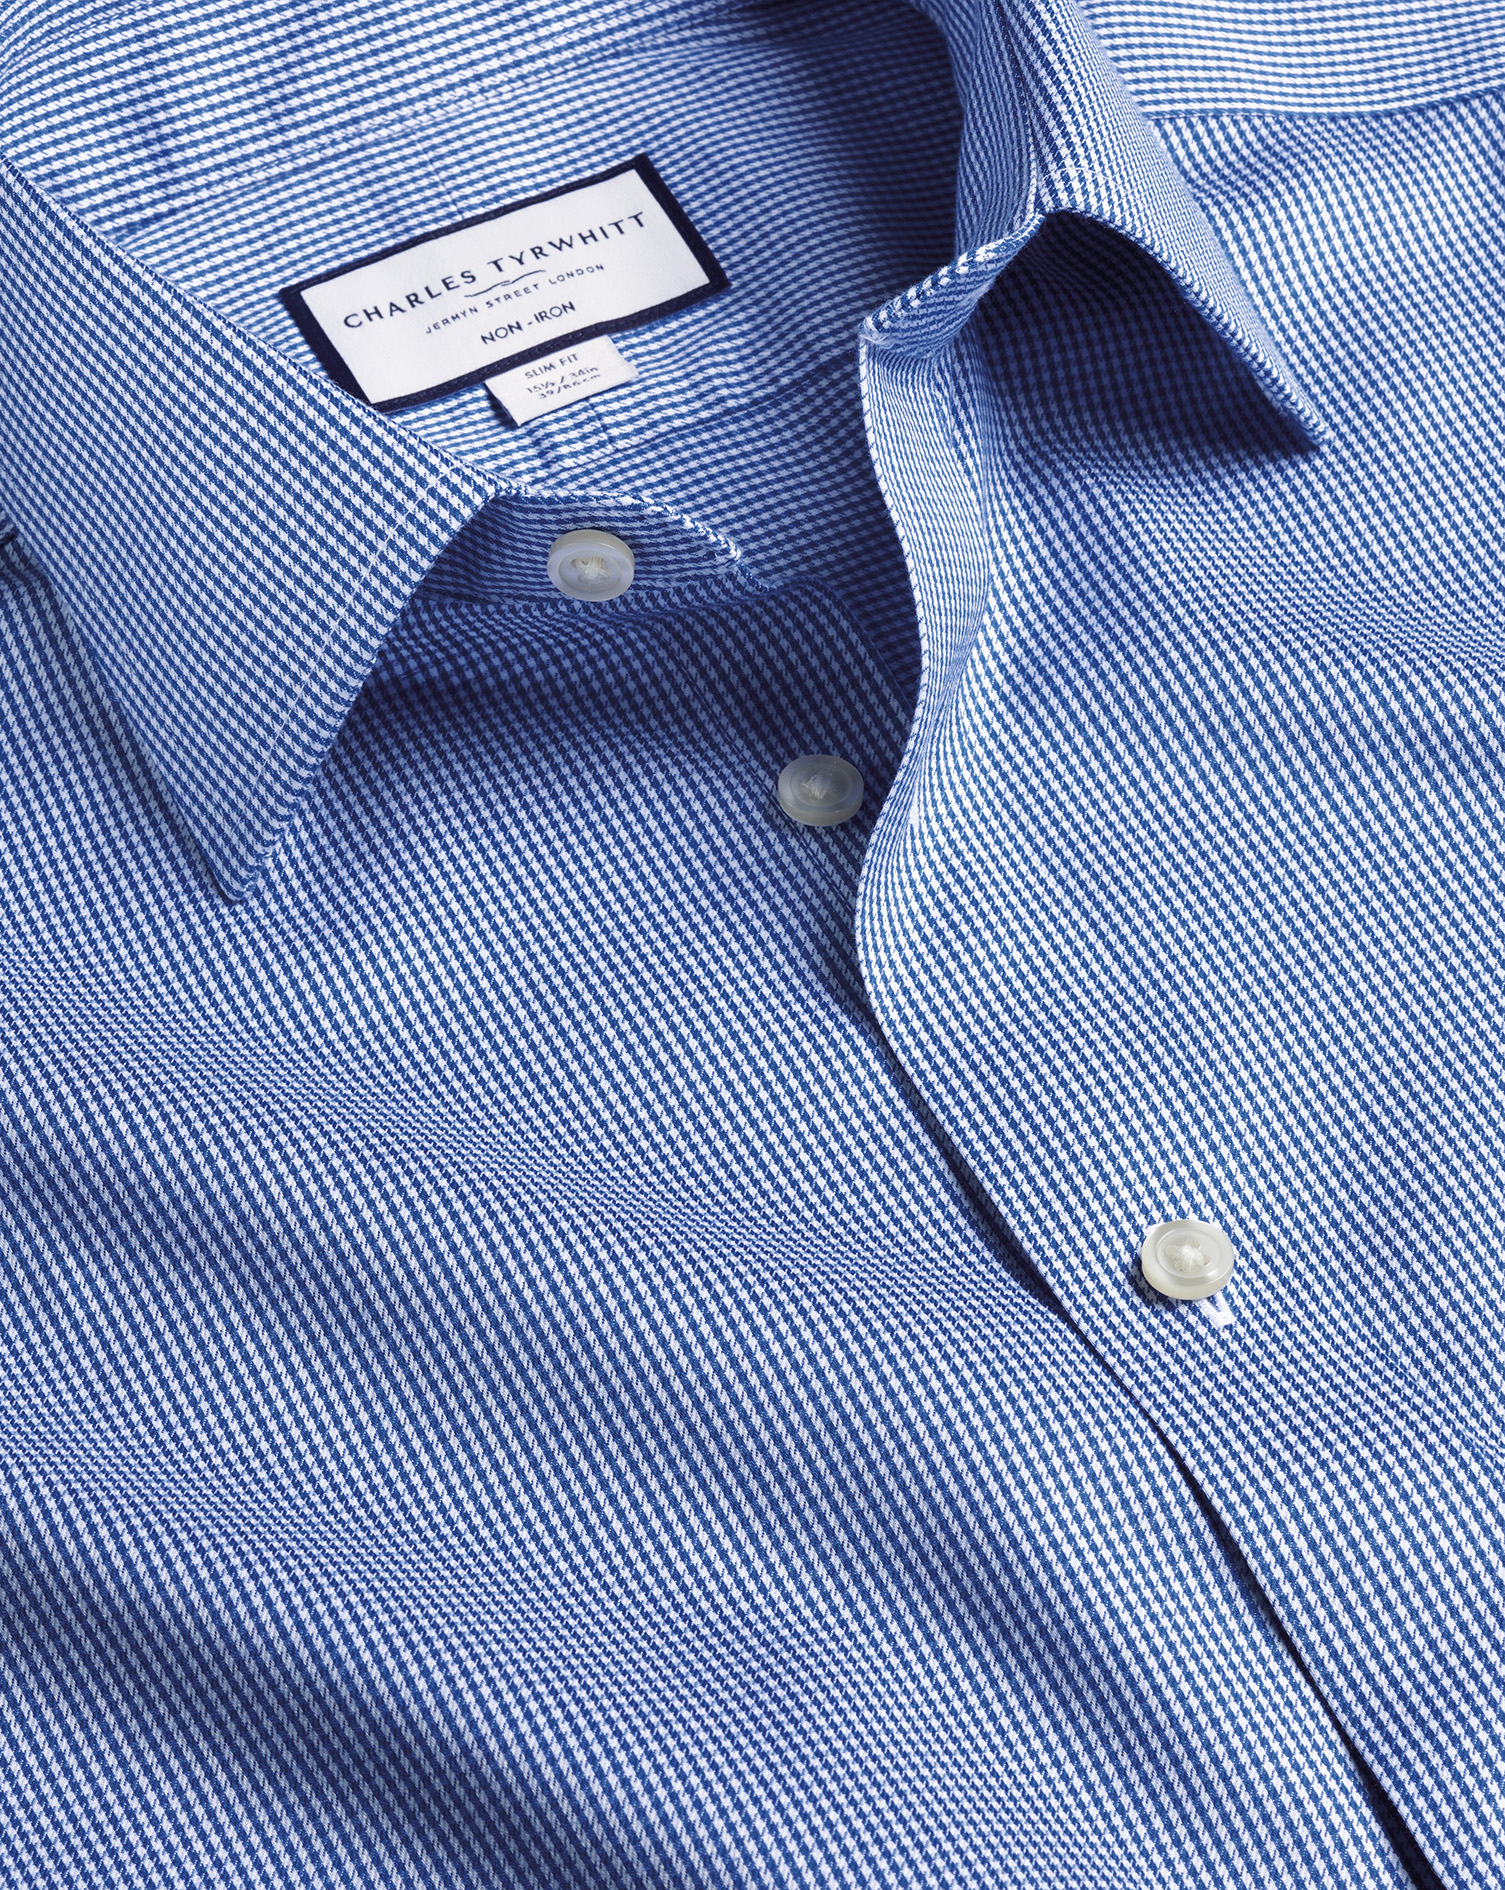 Men's Charles Tyrwhitt Non-Iron Puppytooth Dress Shirt - Royal Blue French Cuff Size XXL Cotton
